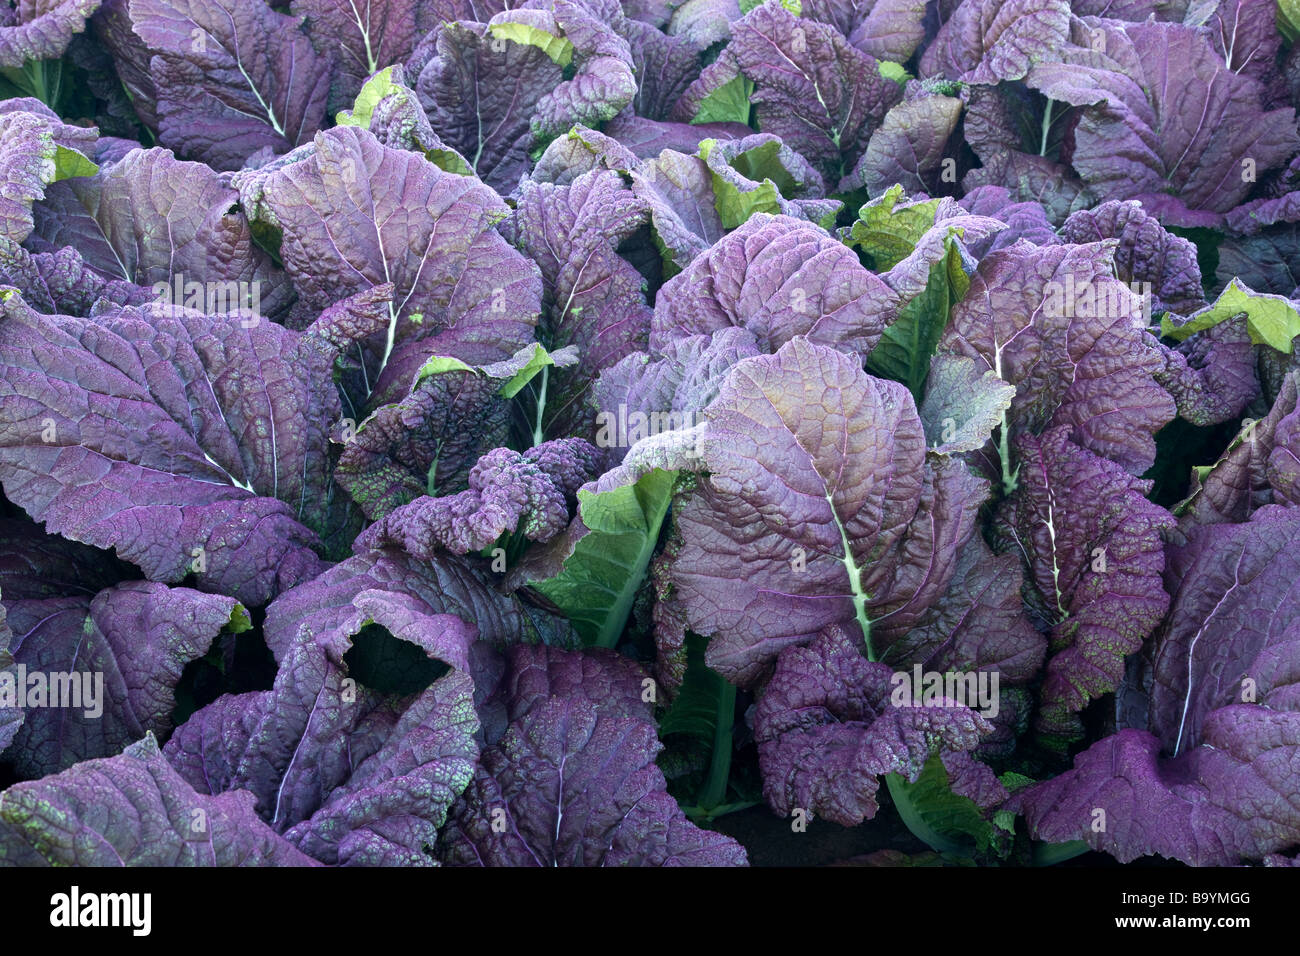 Purple Mustard leaves on plant, organic. Stock Photo